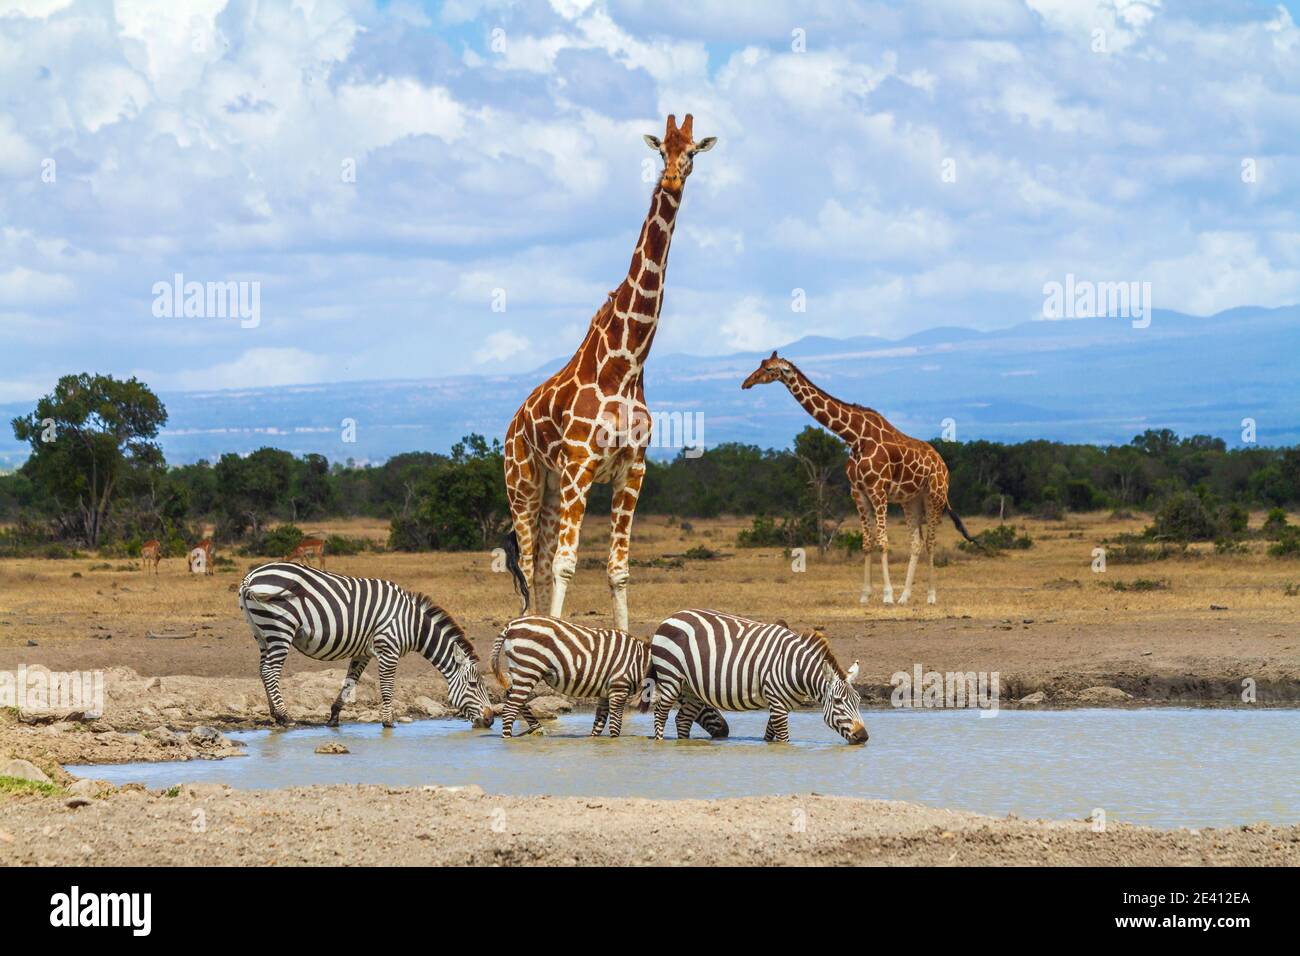 Reticulated giraffes queue at waterhole as zebras drink water. Ol Pejeta Conservancy, Kenya. African wildlife seen on safari vacation Stock Photo